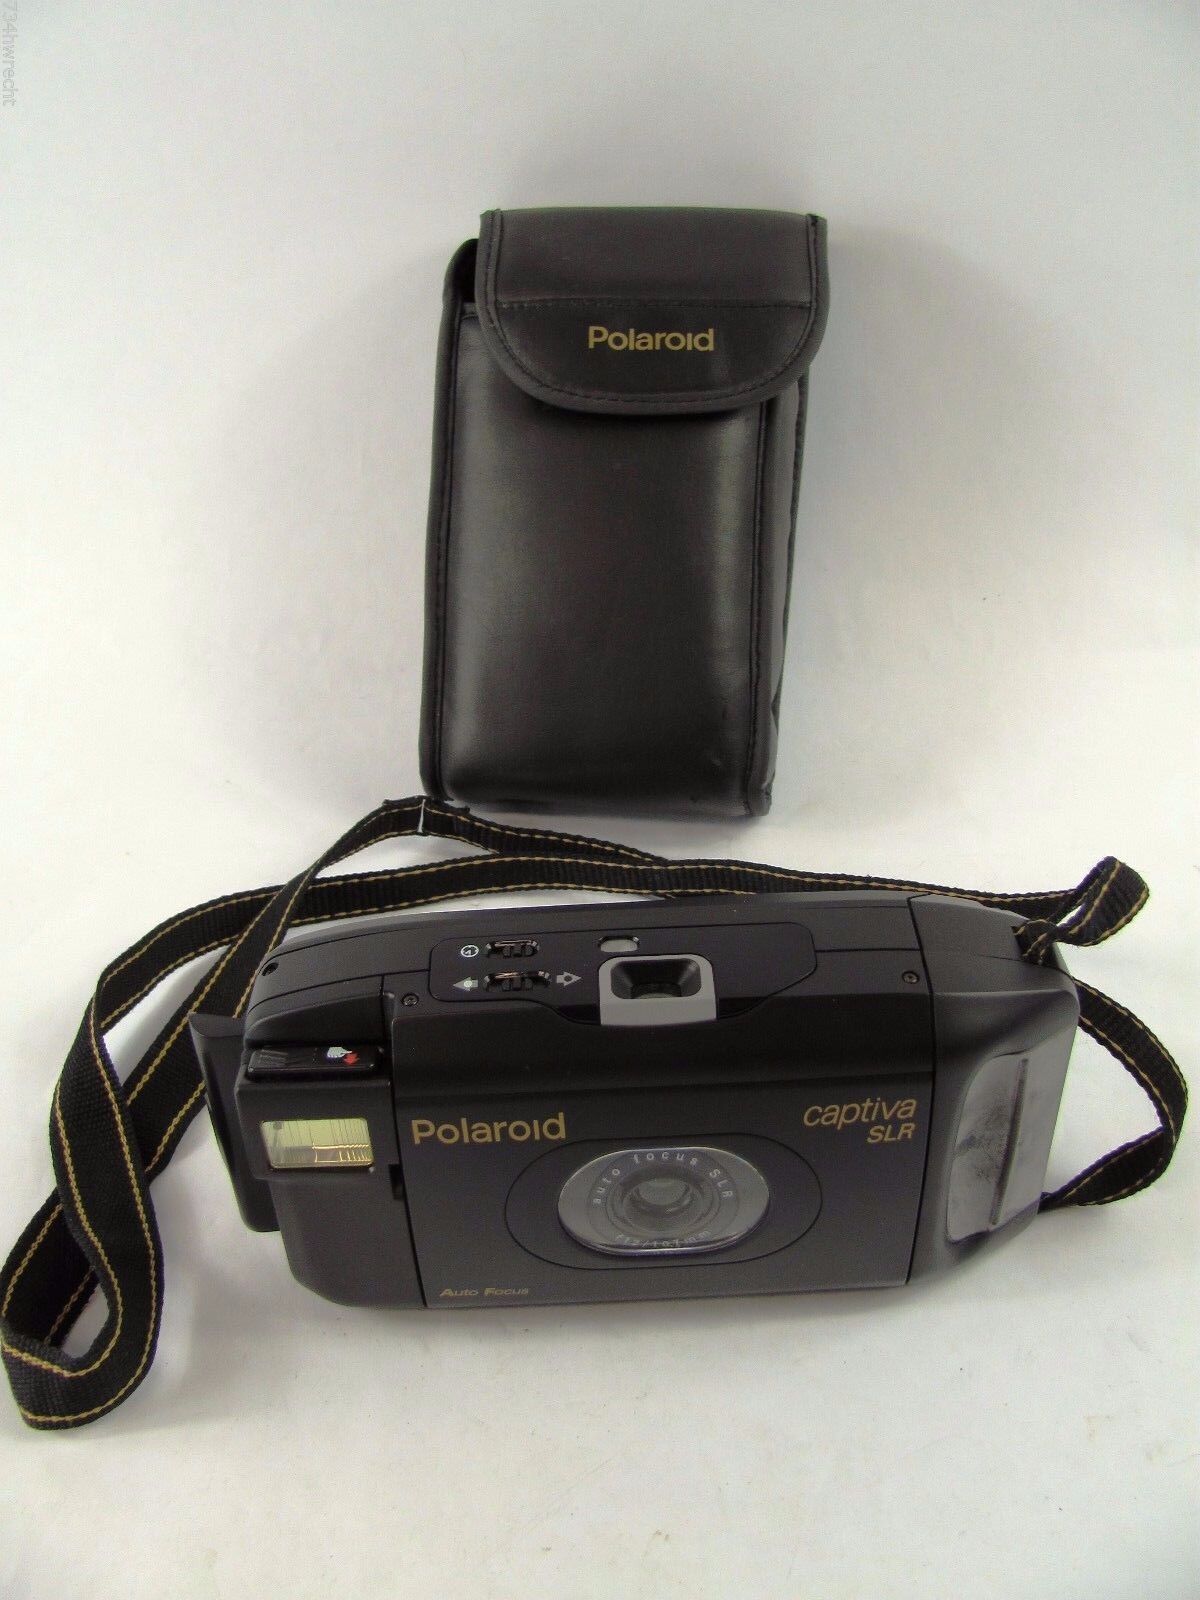 Vintage Polaroid Captiva SLR 95 Film Camera Purchase case Auto Focus Washington Mall with